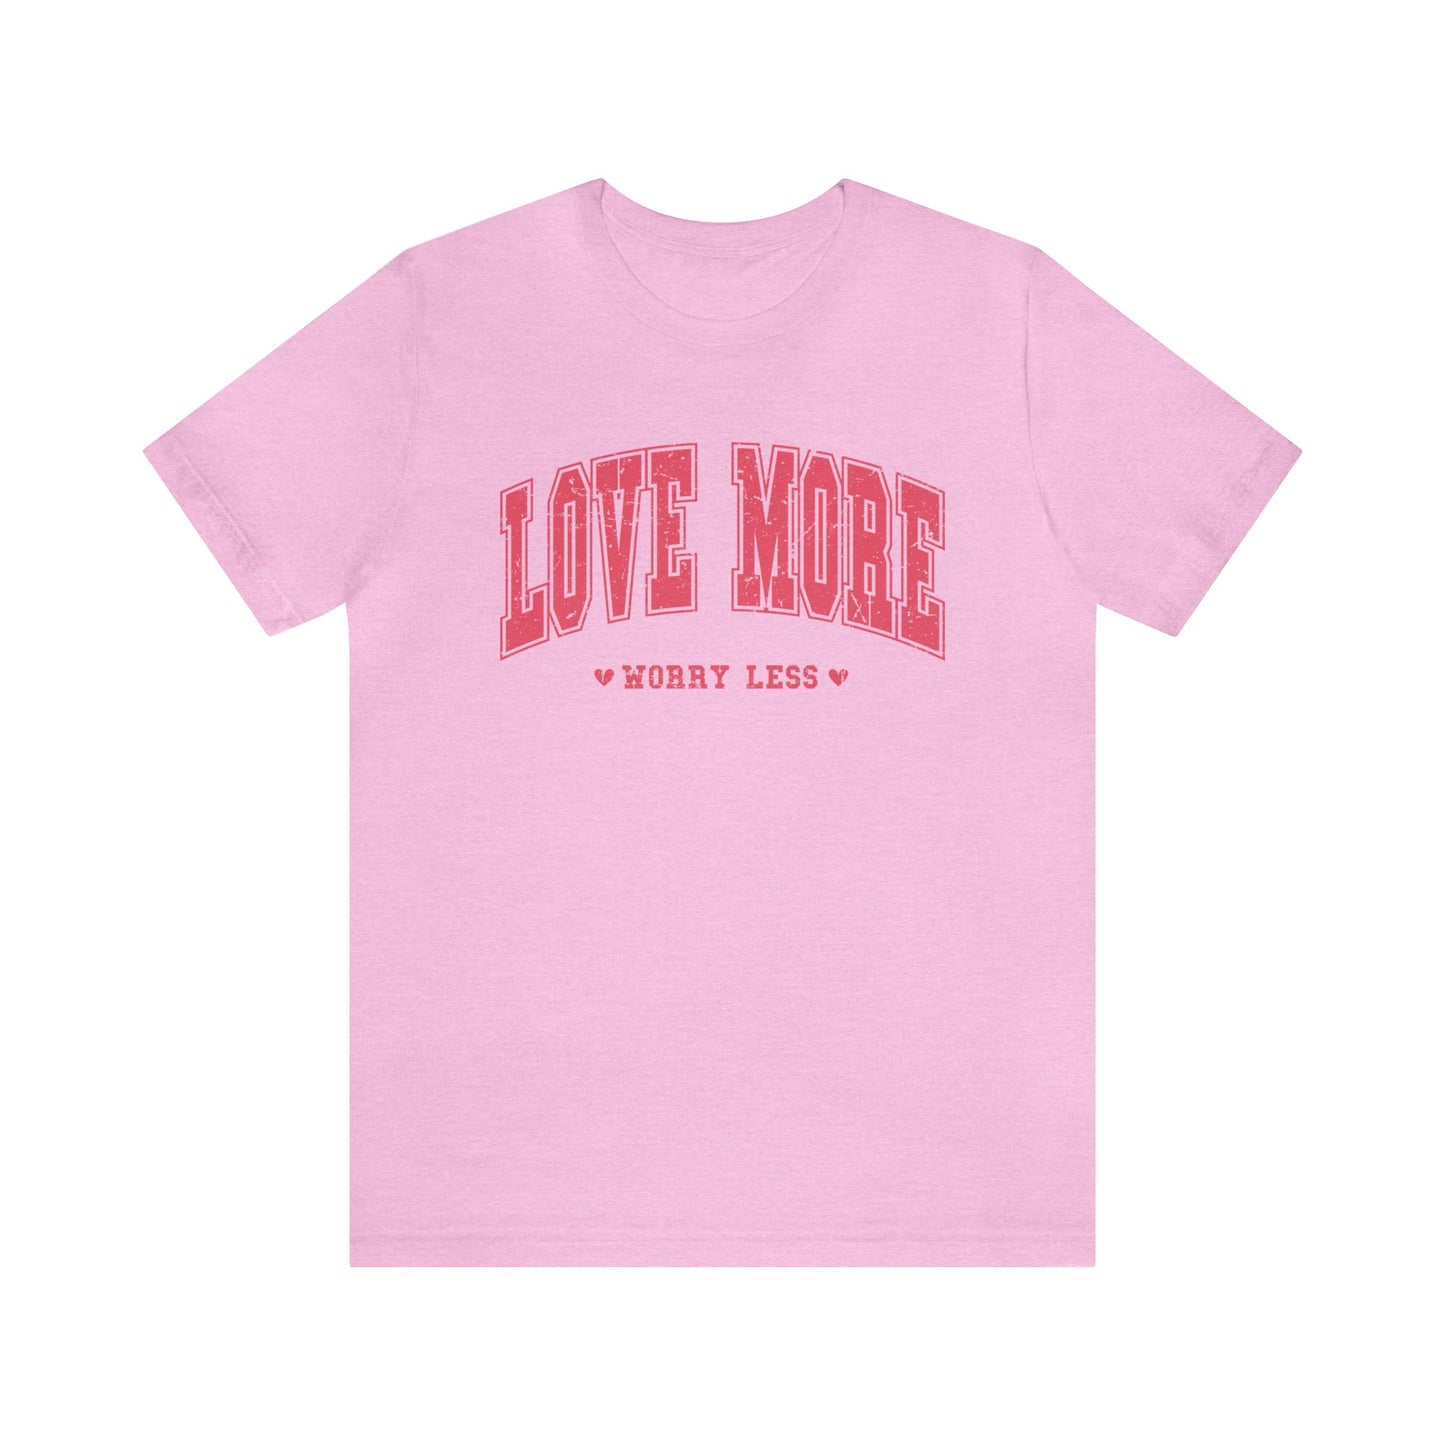 Love More Worry Less Women's Tshirt